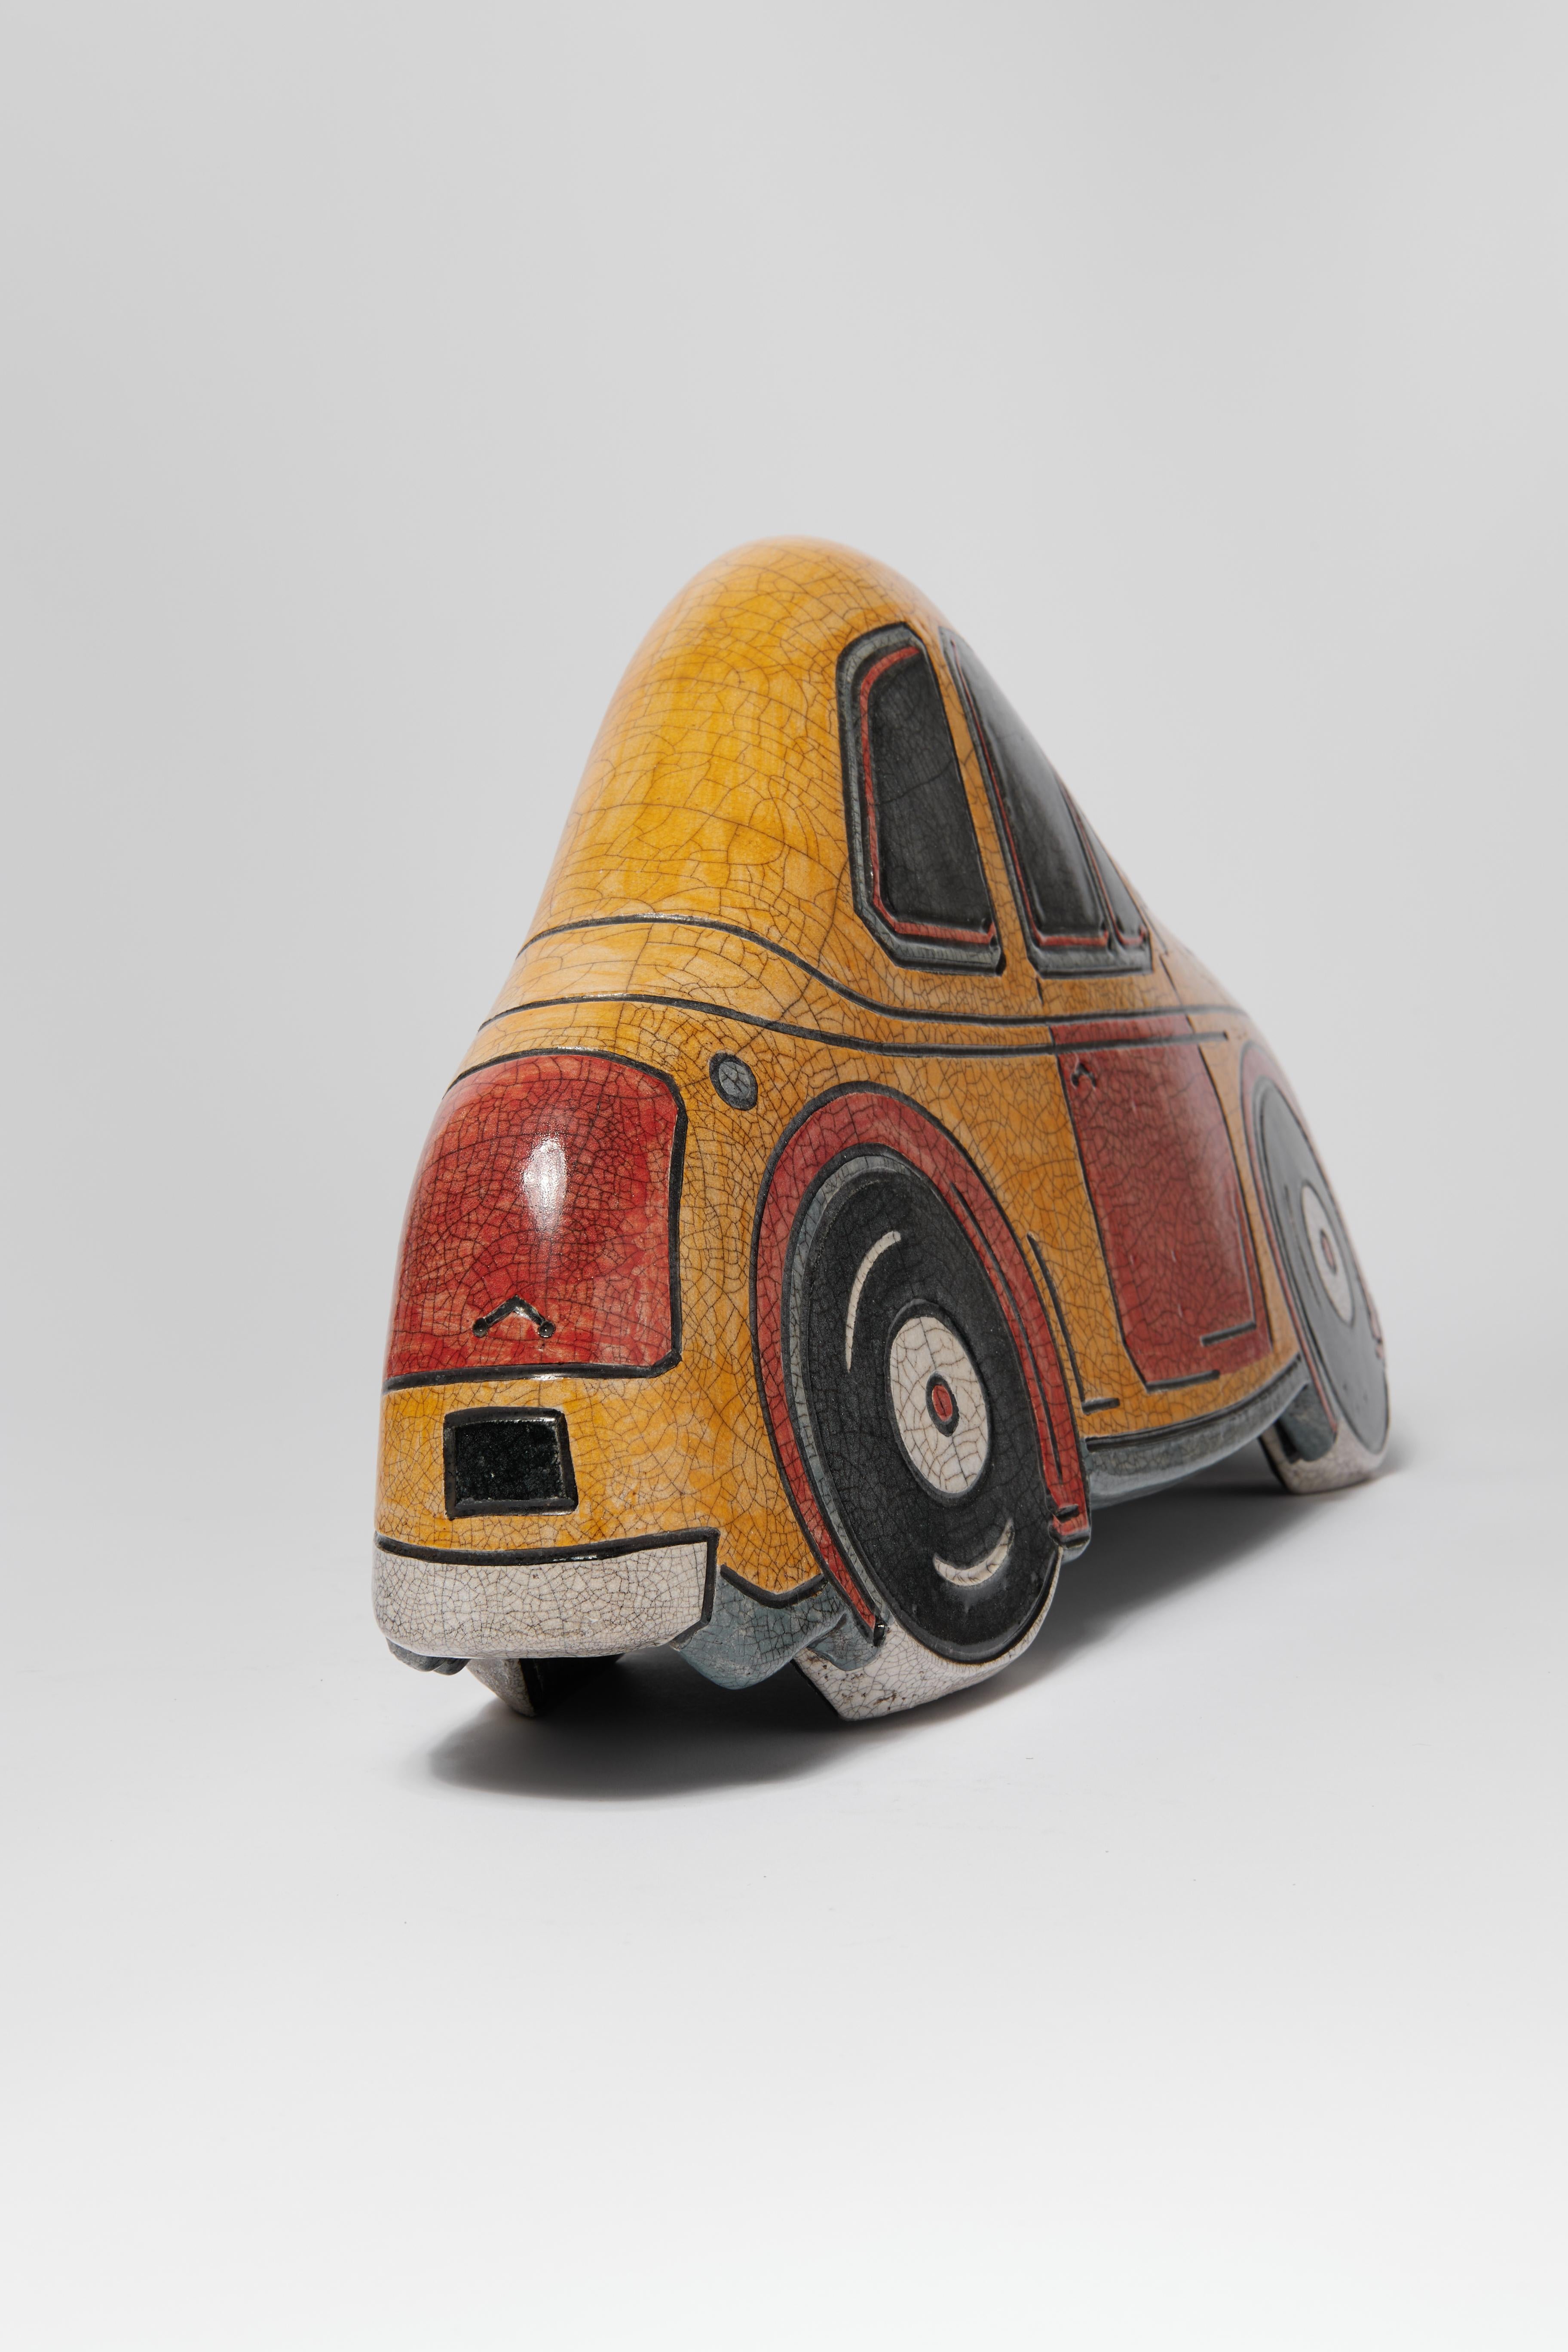 20th Century Raku Fired Stoneware Car, Contemporary British Artist For Sale 1